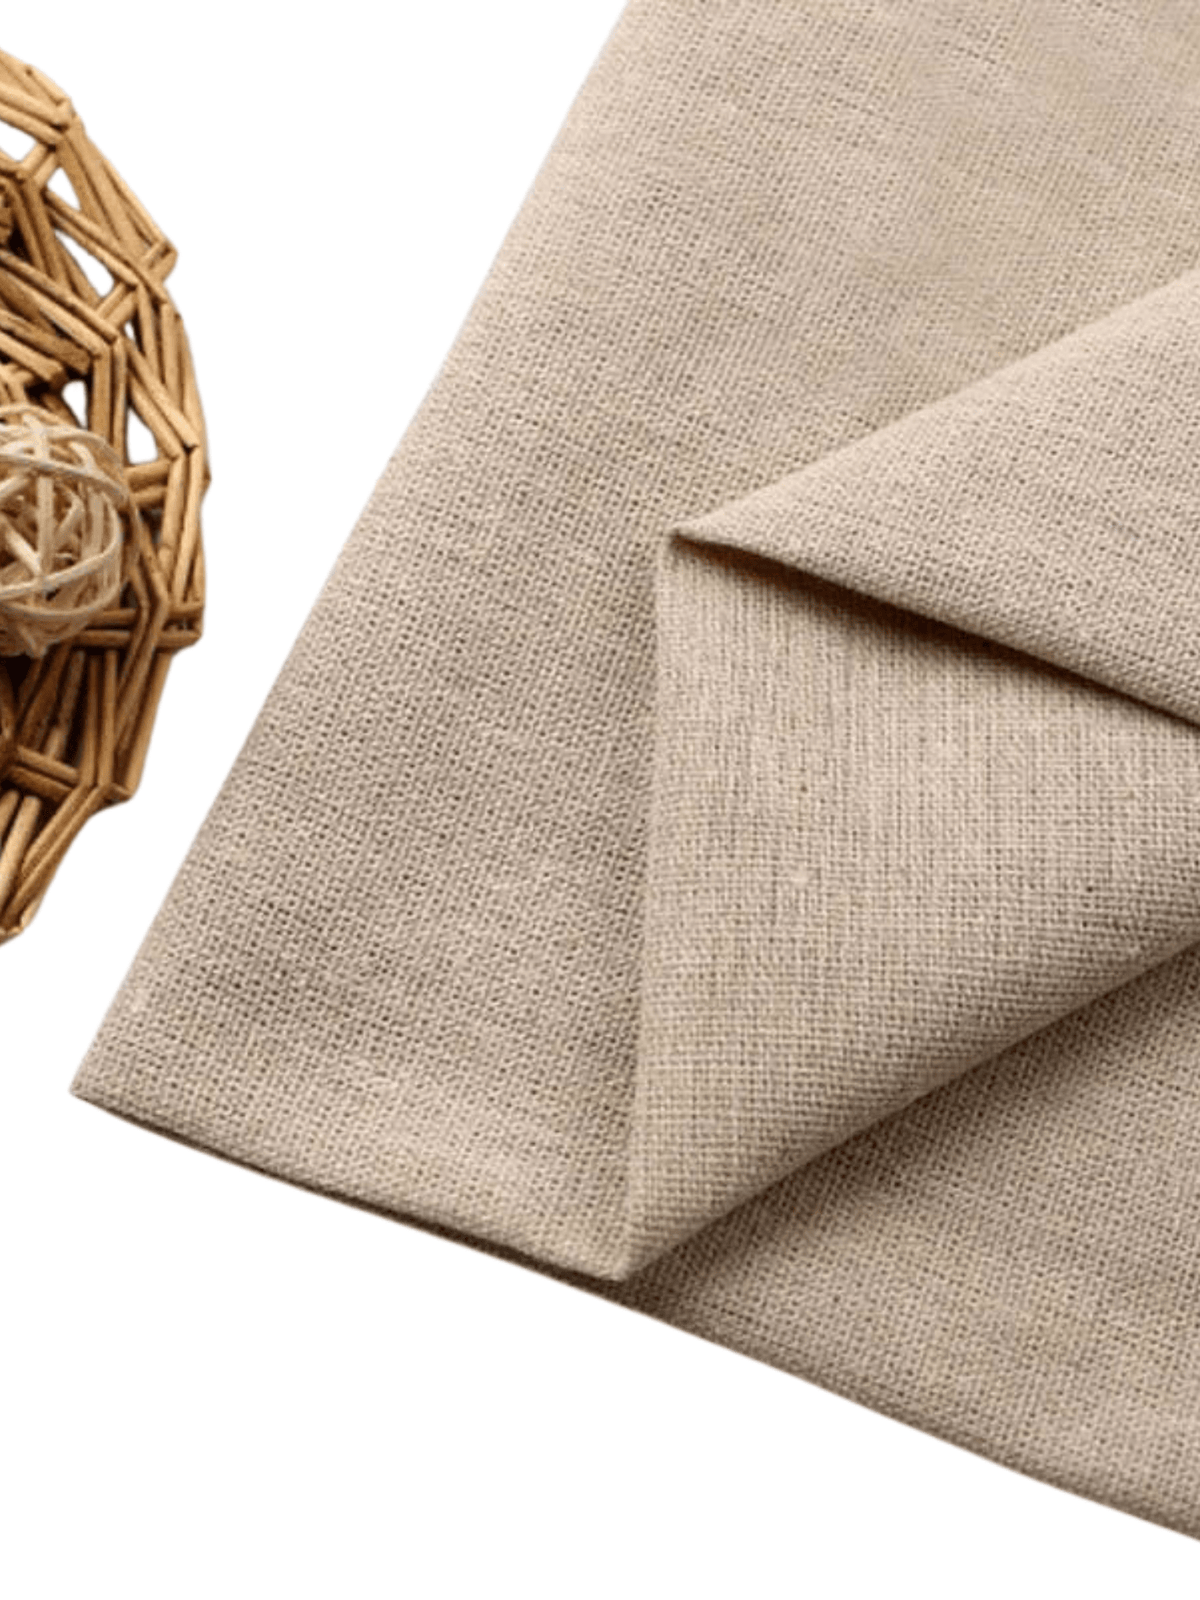 Tissu Coton/Lin pour Poncho DIY  Beige / 0.5mX1.5m / Coton/Lin